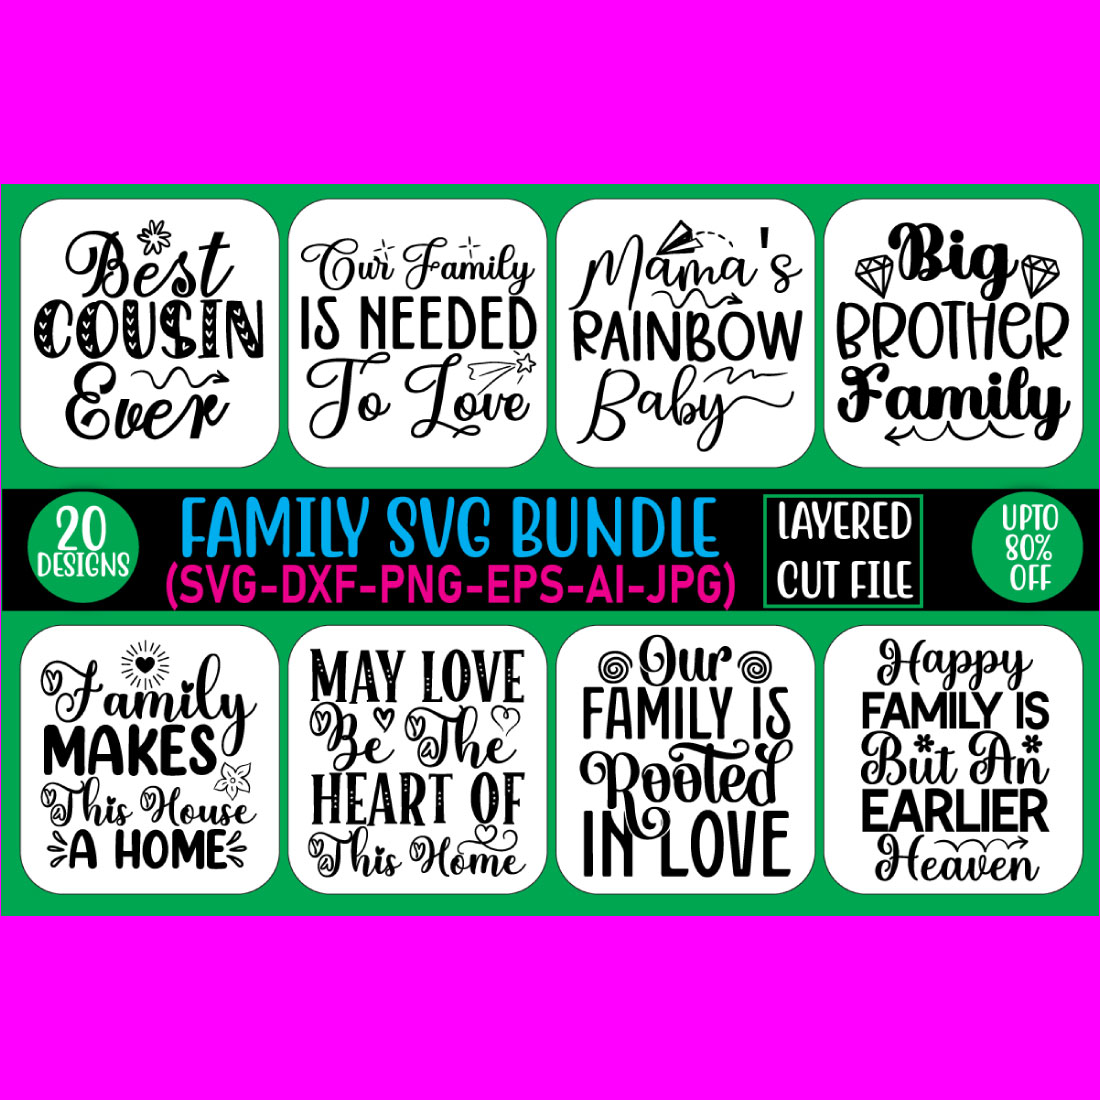 Family SVG Bundle cover image.